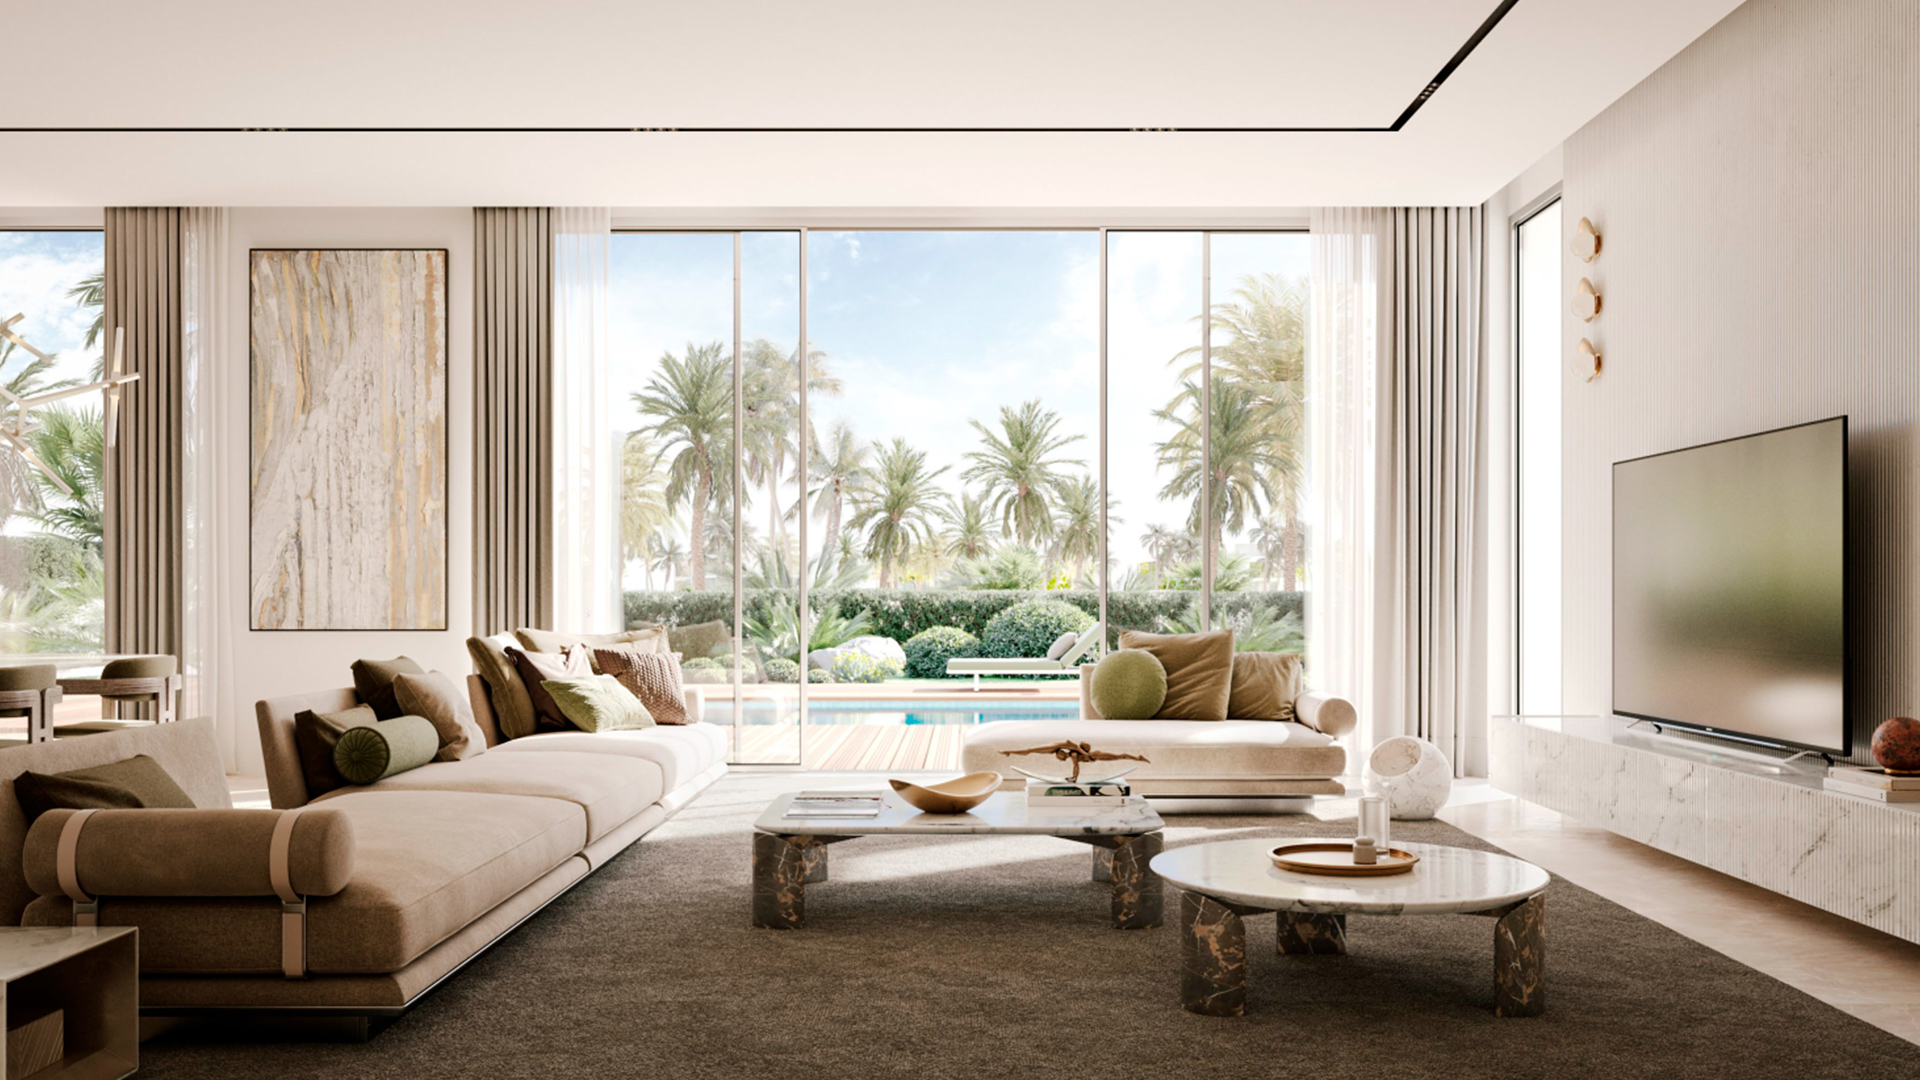 Vivenda para venda em Mohammed Bin Rashid City, Dubai, EAU 7 divisões, 1672 m². № 27738 - foto 3